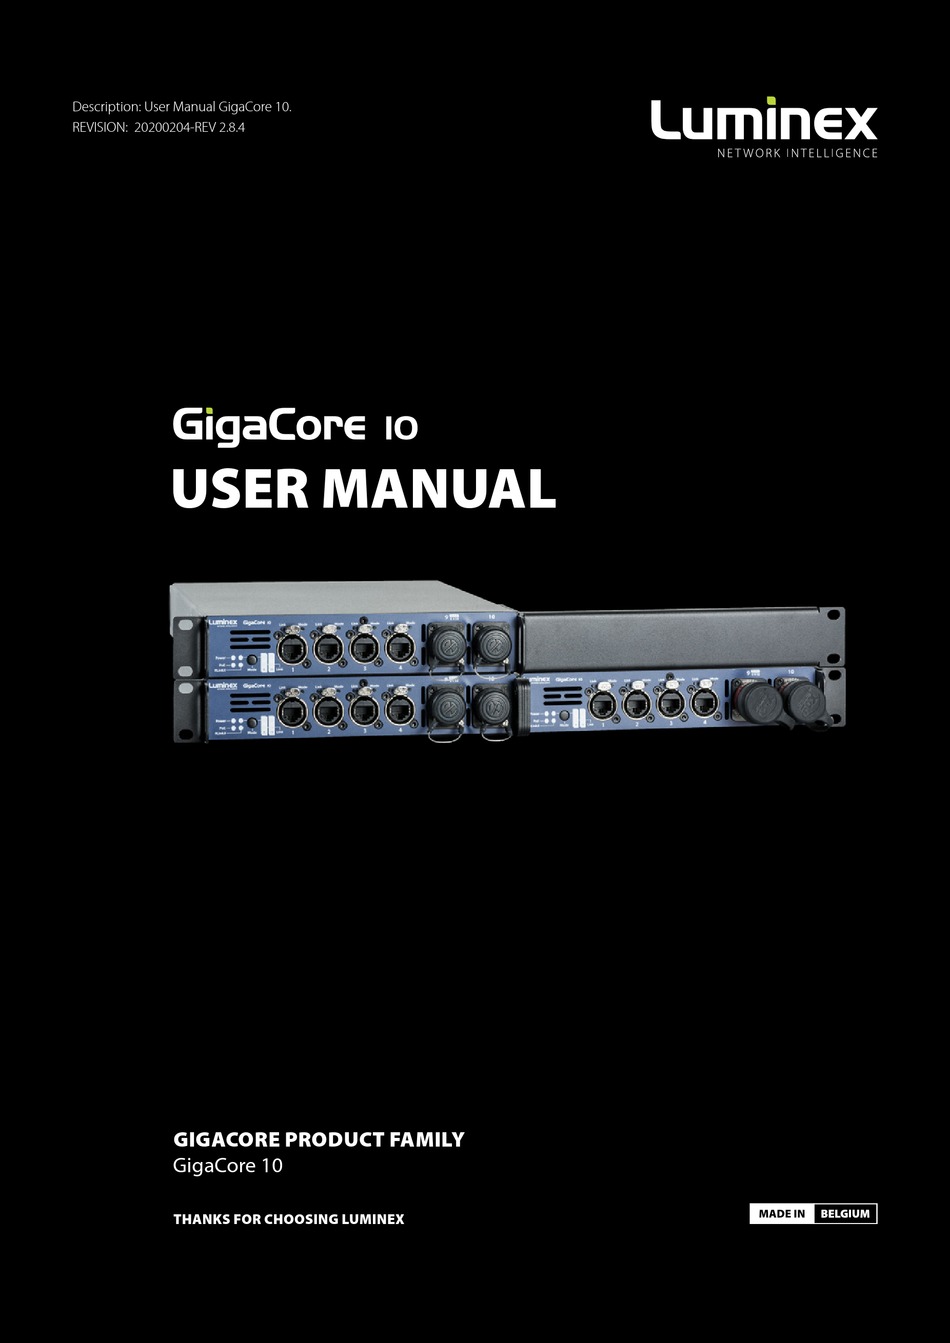 GigaCore 10 - AV Network Switch by Luminex Network Intelligence